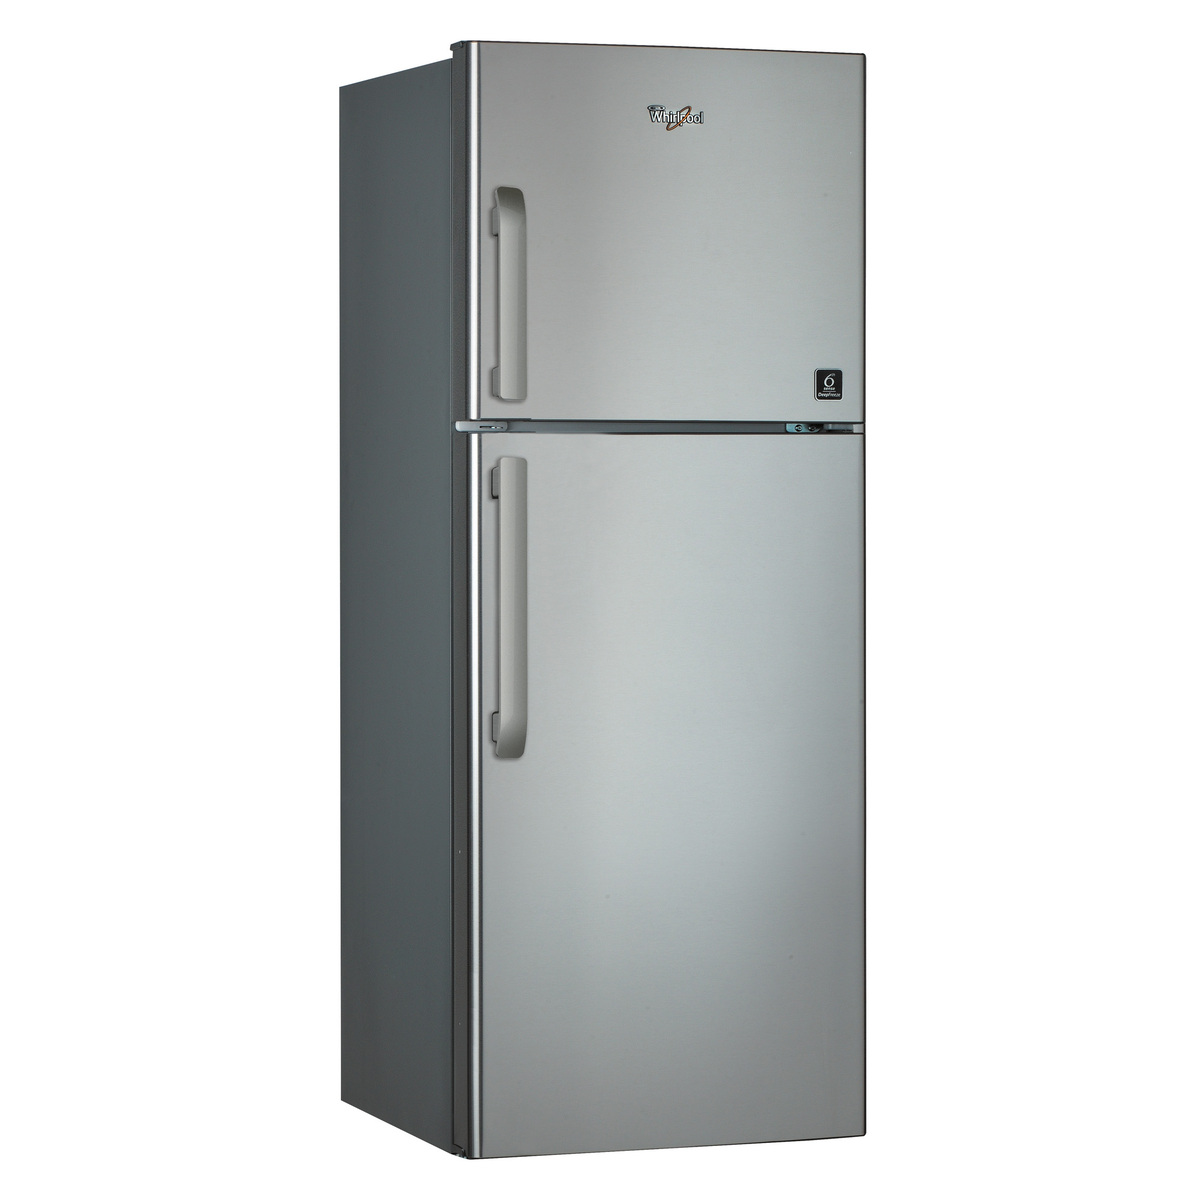 Whirlpool Double Door Refrigerator,  260 L, Silver, WTM322RSL